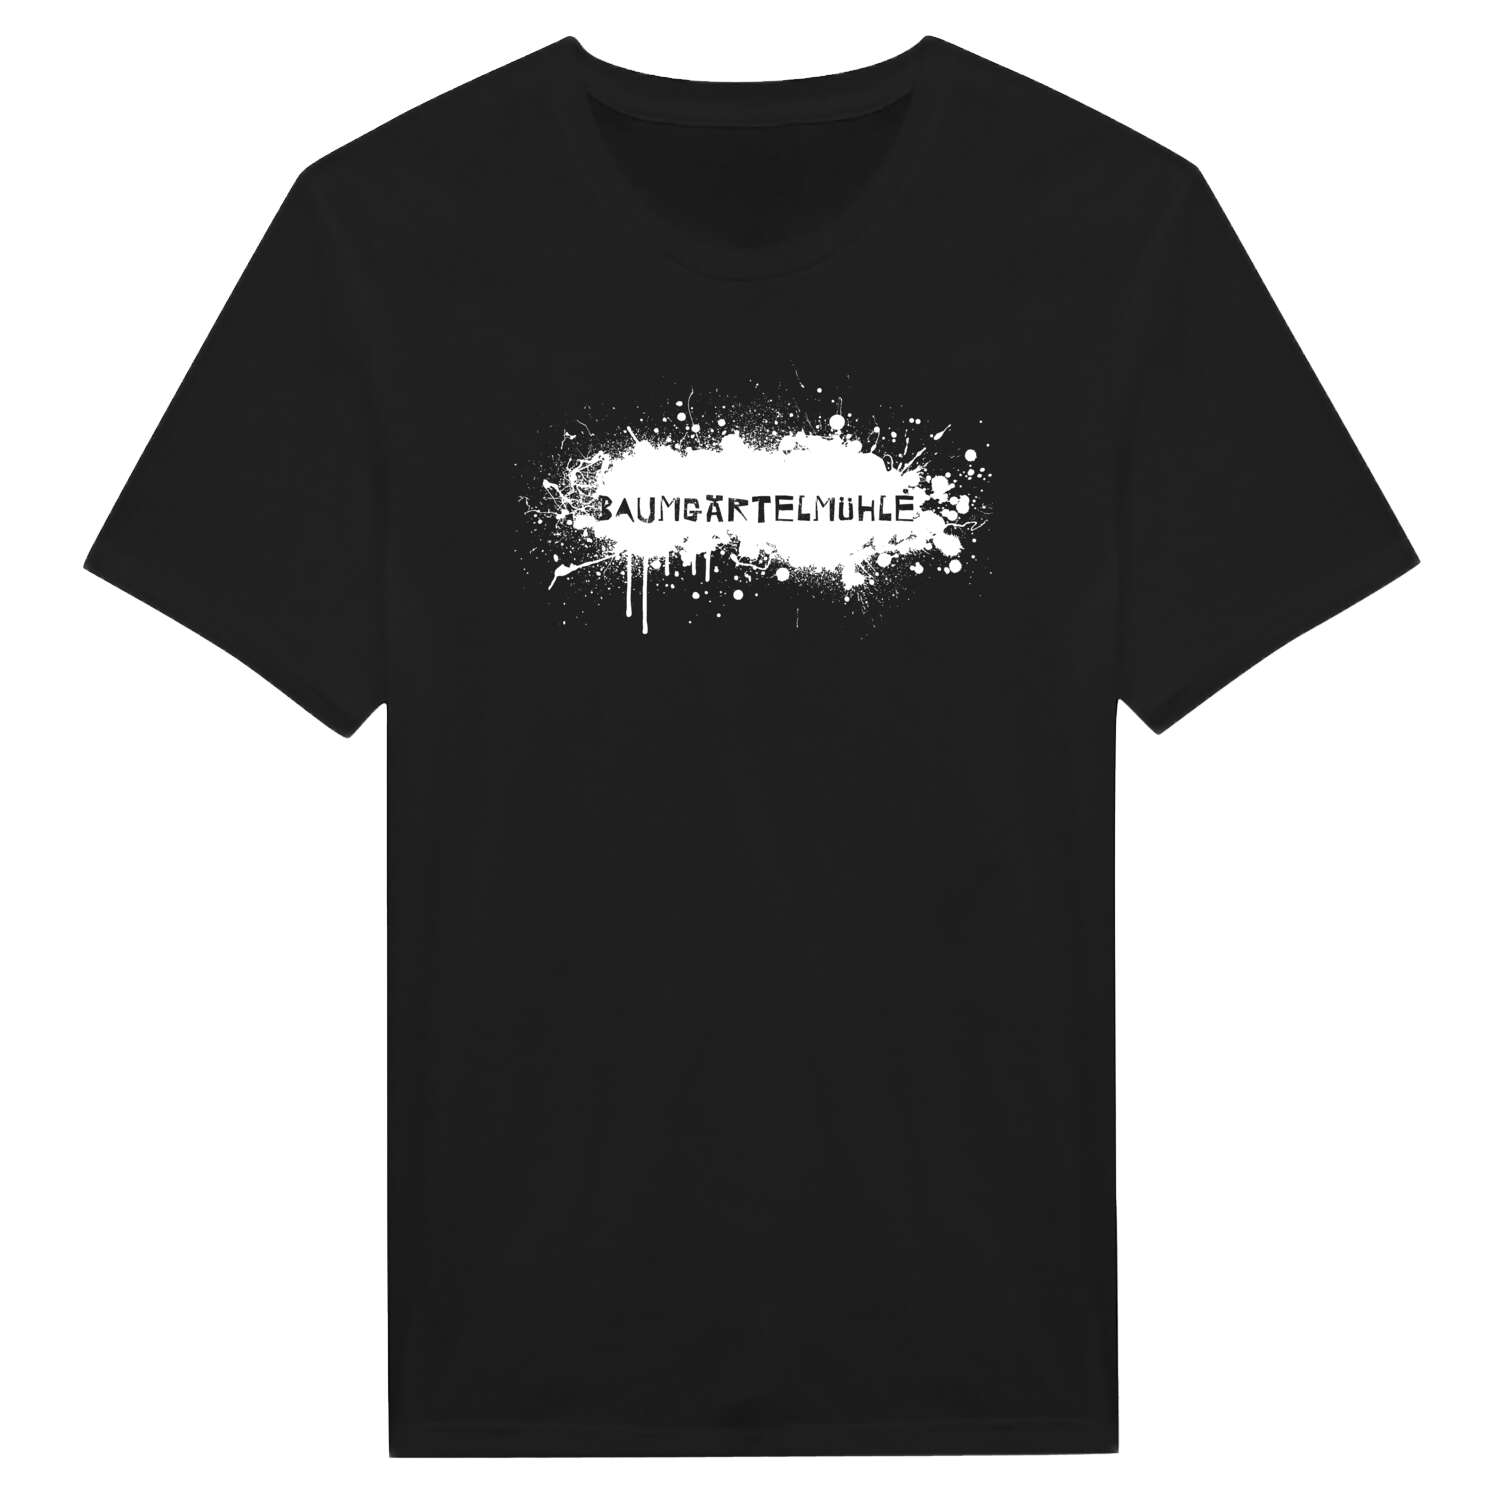 Baumgärtelmühle T-Shirt »Paint Splash Punk«